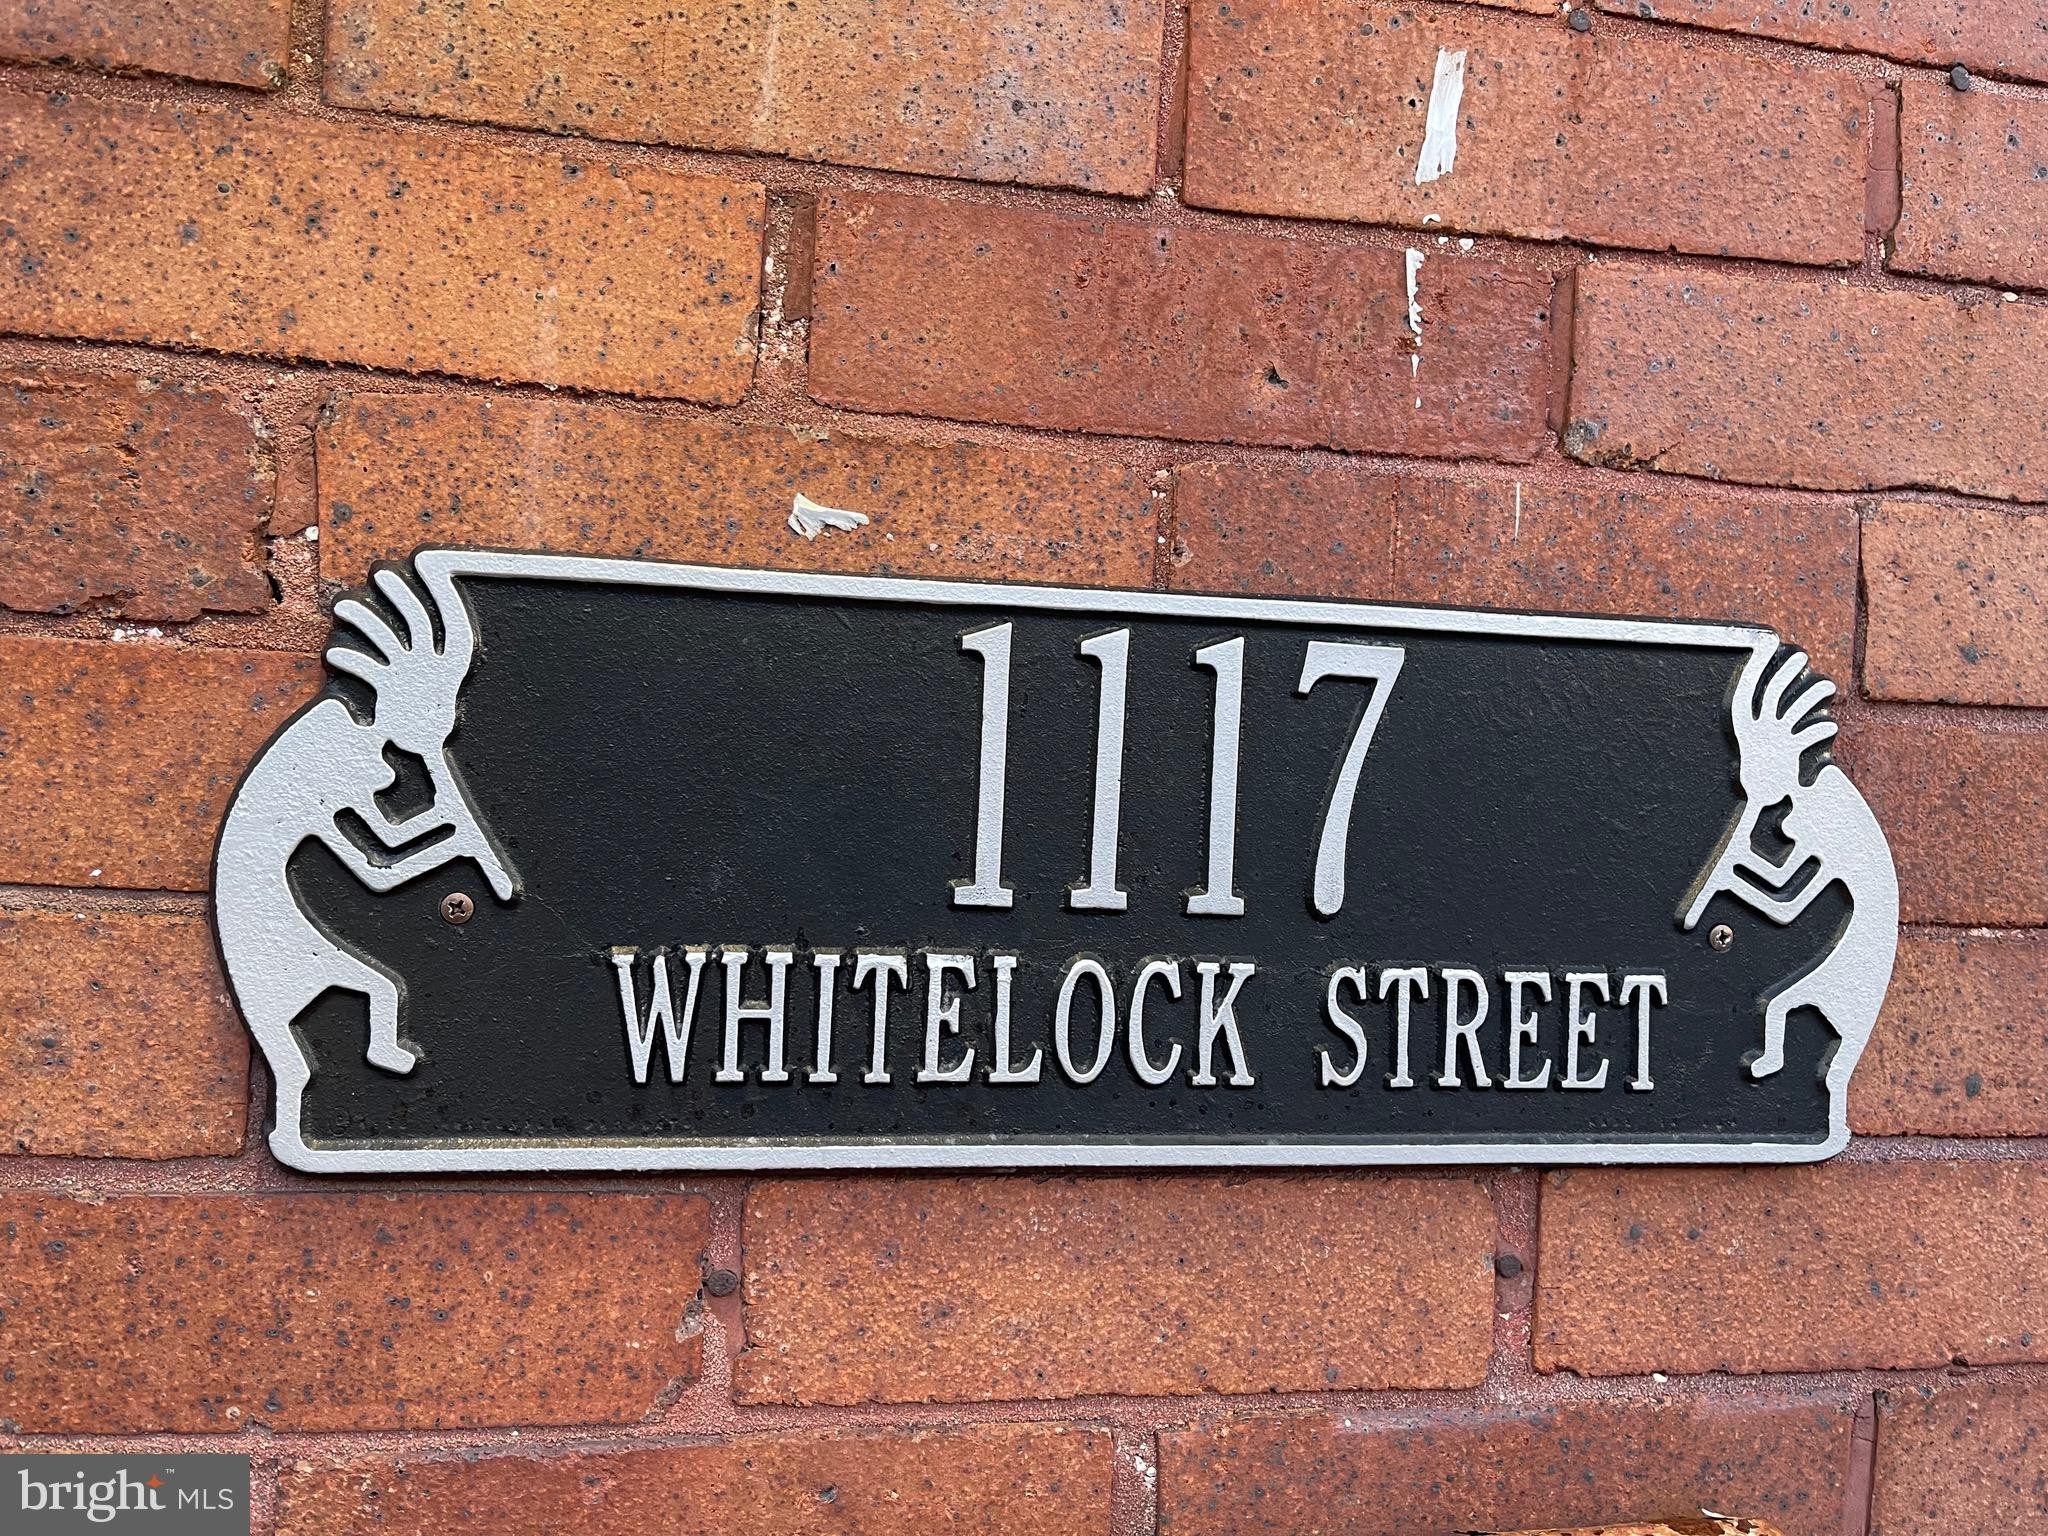 1. 1117 Whitelock Street